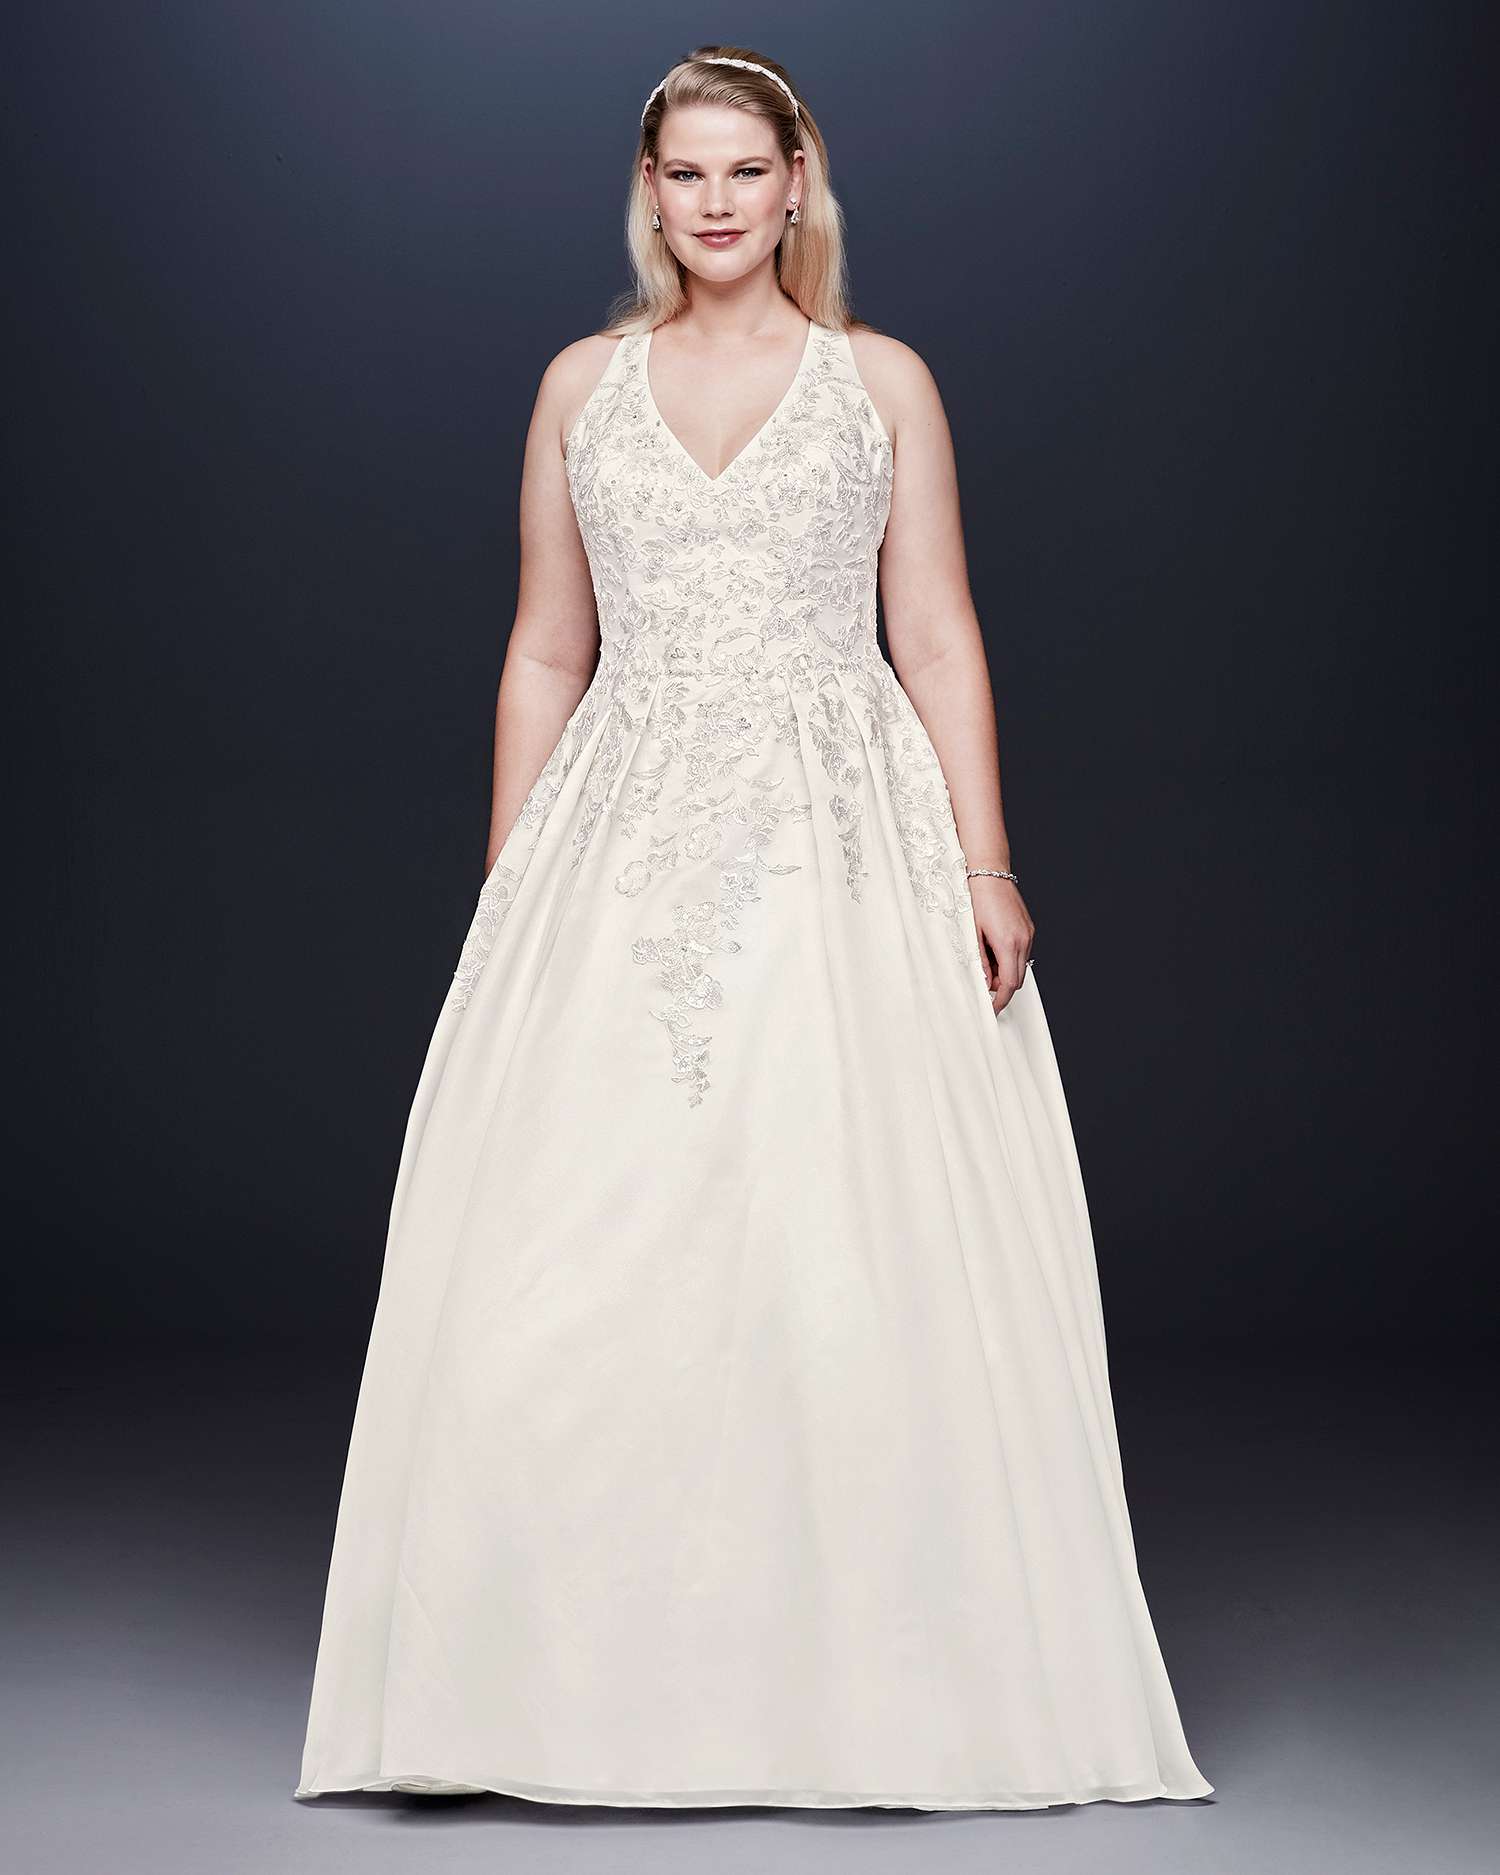 david's bridal 2019 wedding dresses